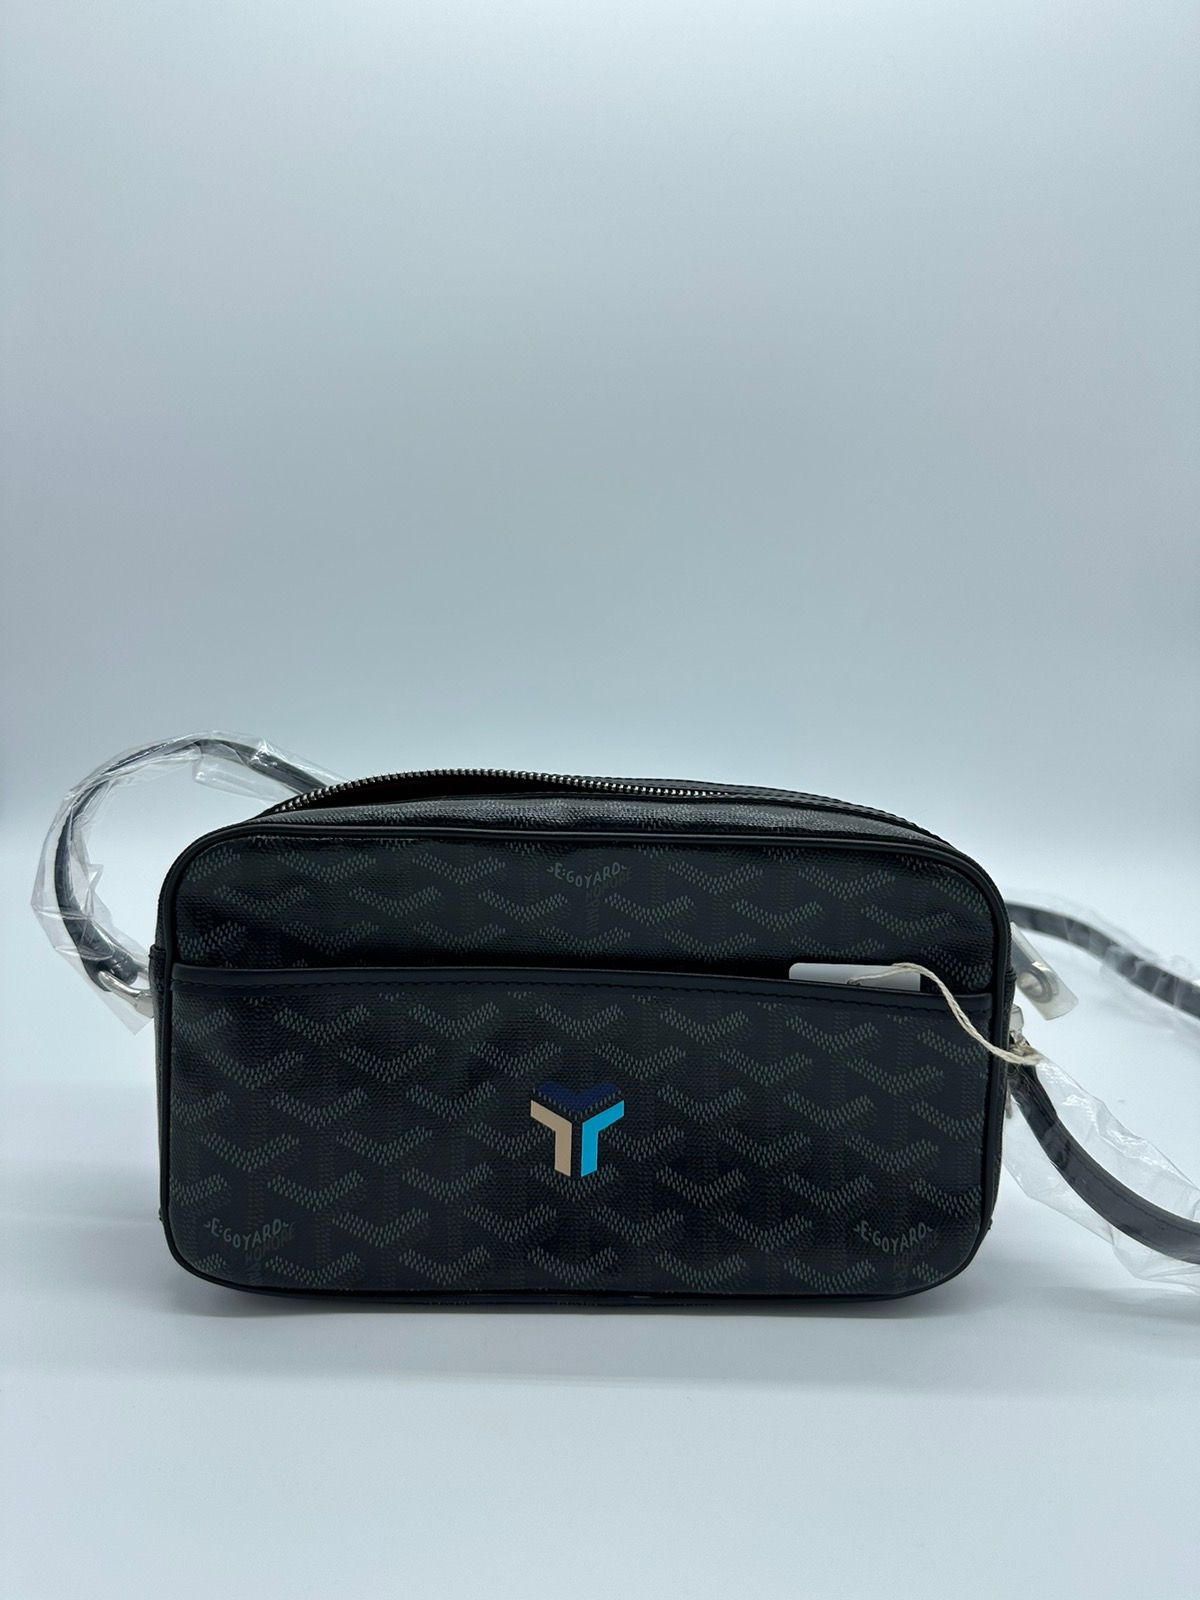 Goyard Cap-Vert PM Black Bag – Cheap Willardmarine Jordan outlet